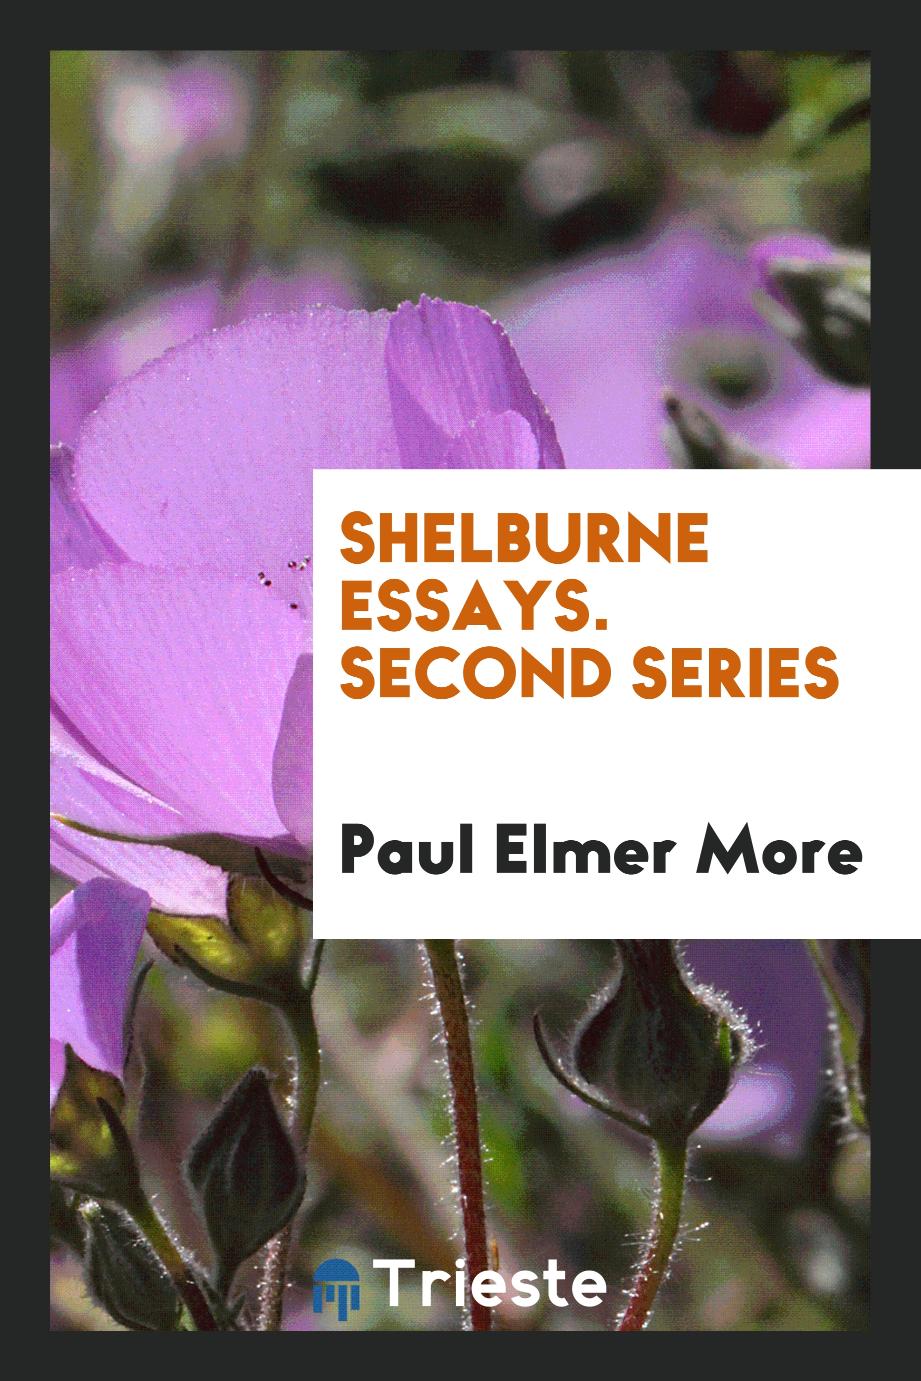 Shelburne essays. Second series